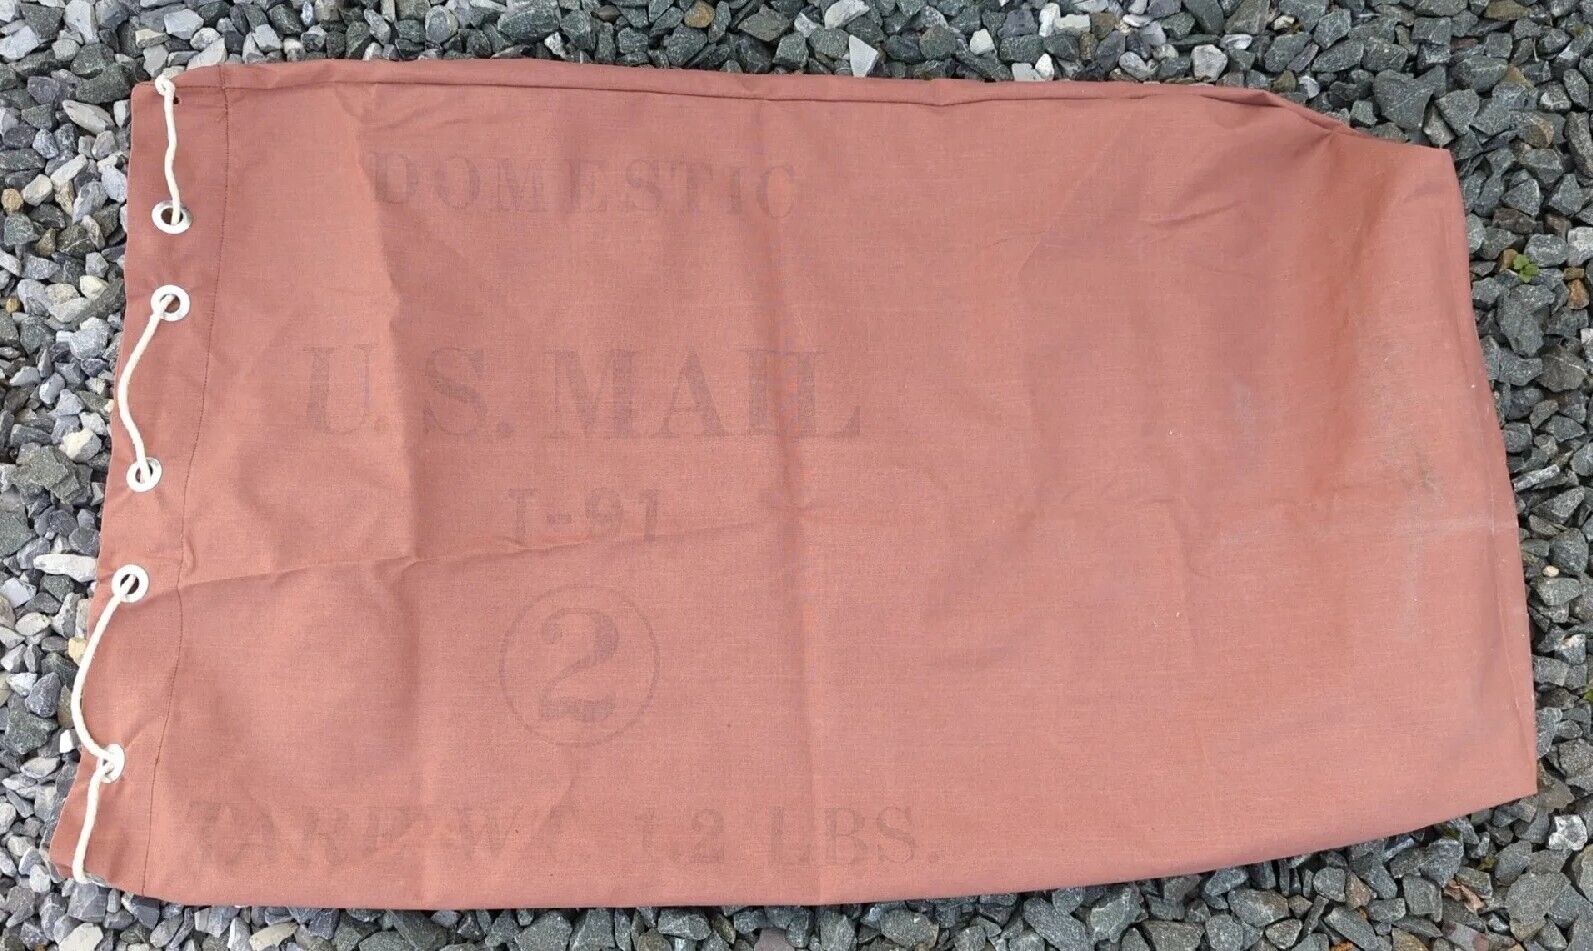 Vintage Domestic US Mail Canvas Bag #2 Duffle Bag Mailman Postal Worker